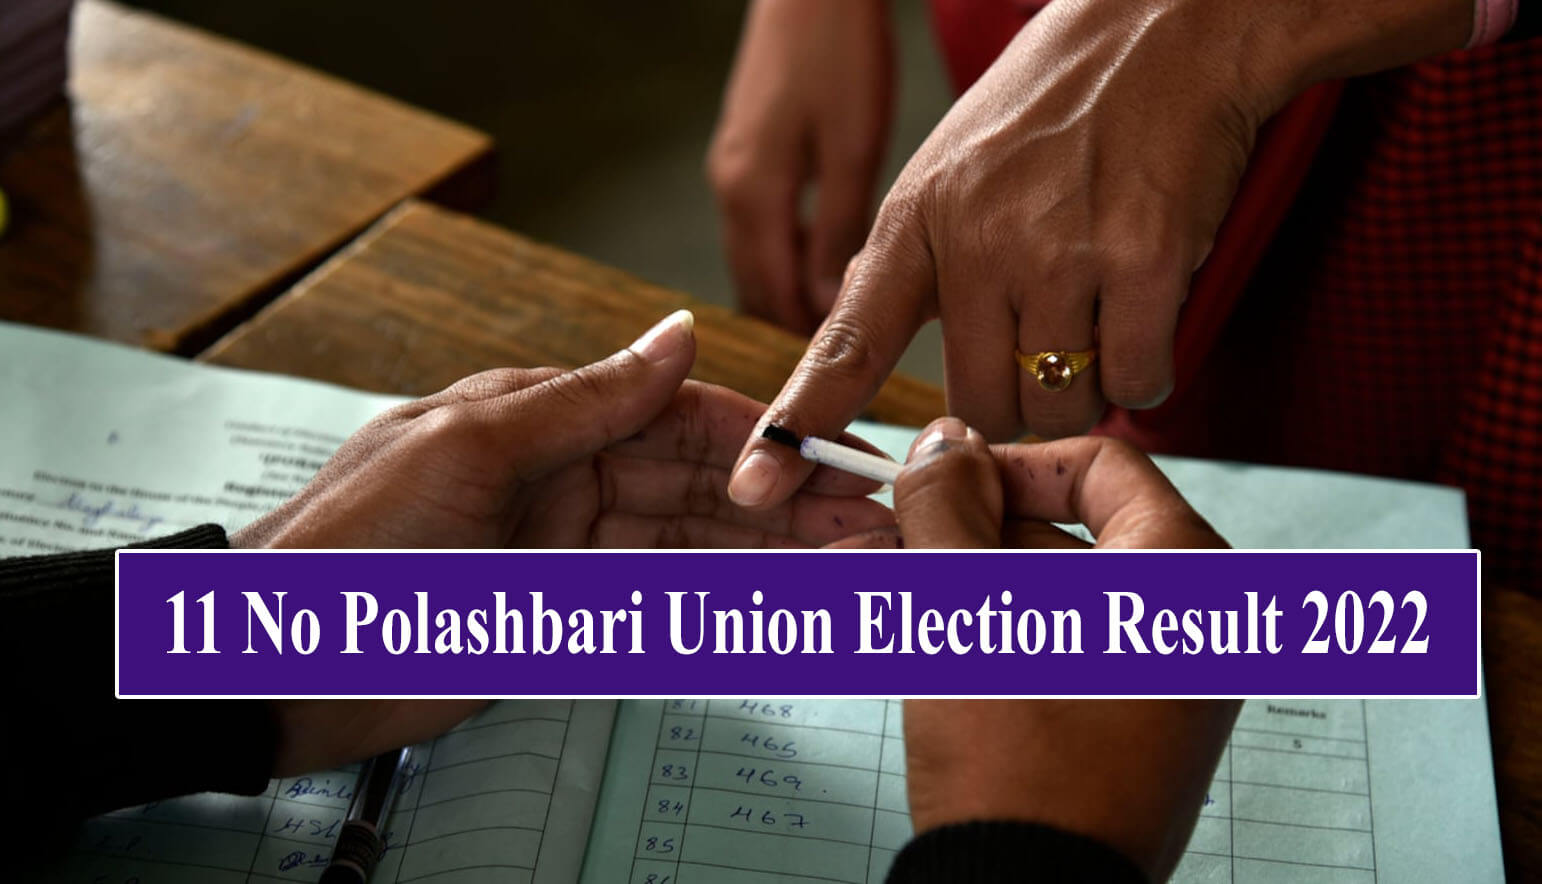 11 No Polashbari Union Election Result 2022